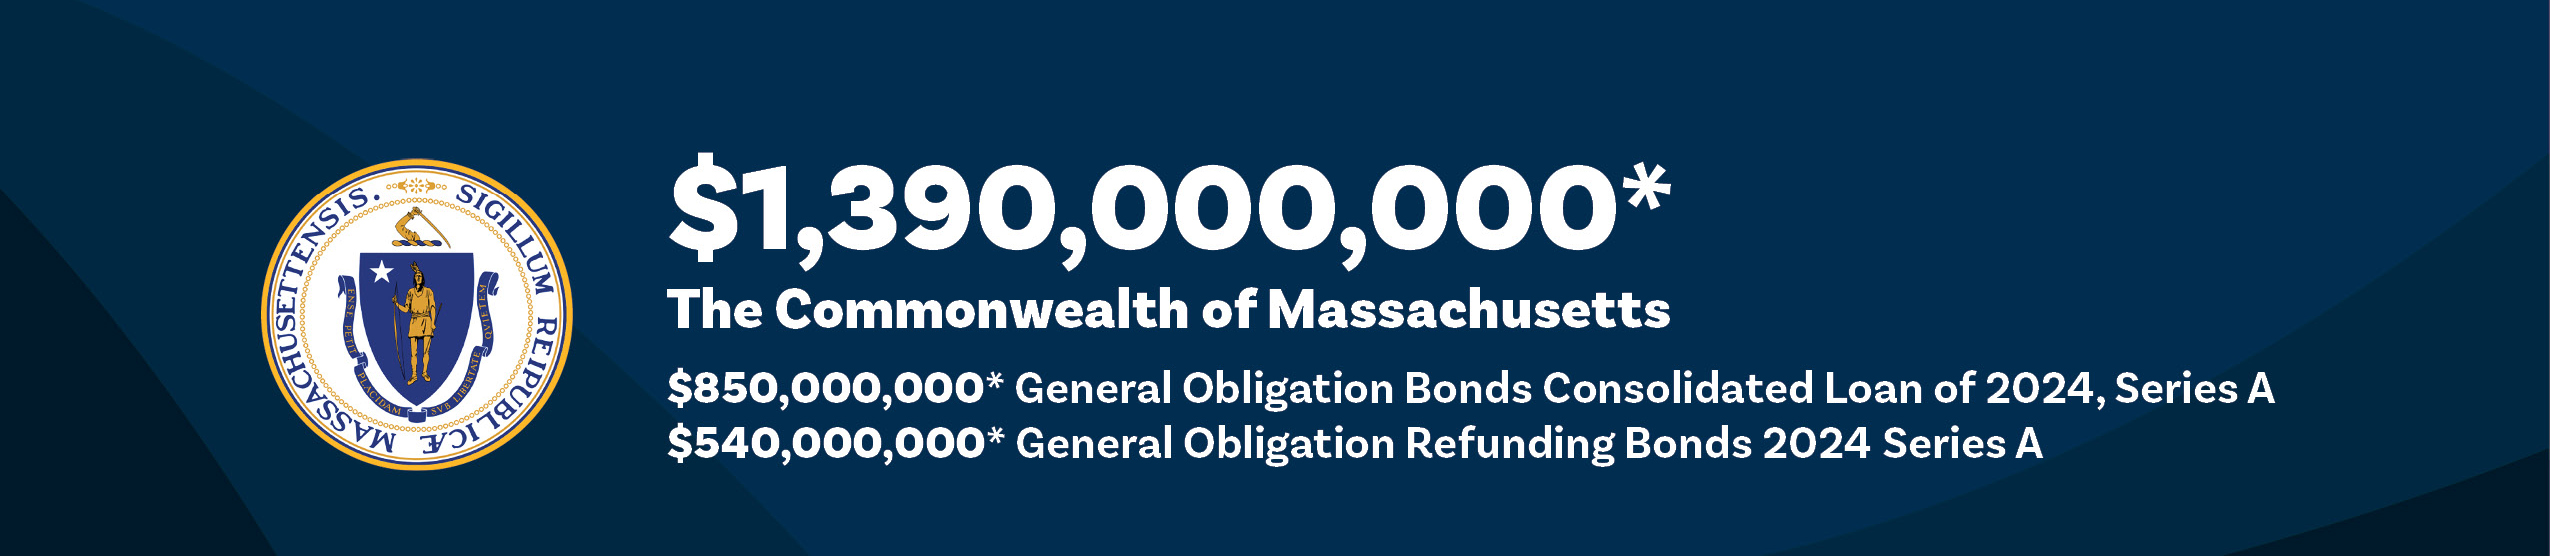 $1.390 billion* Commonwealth of Massachusetts Bond Sale